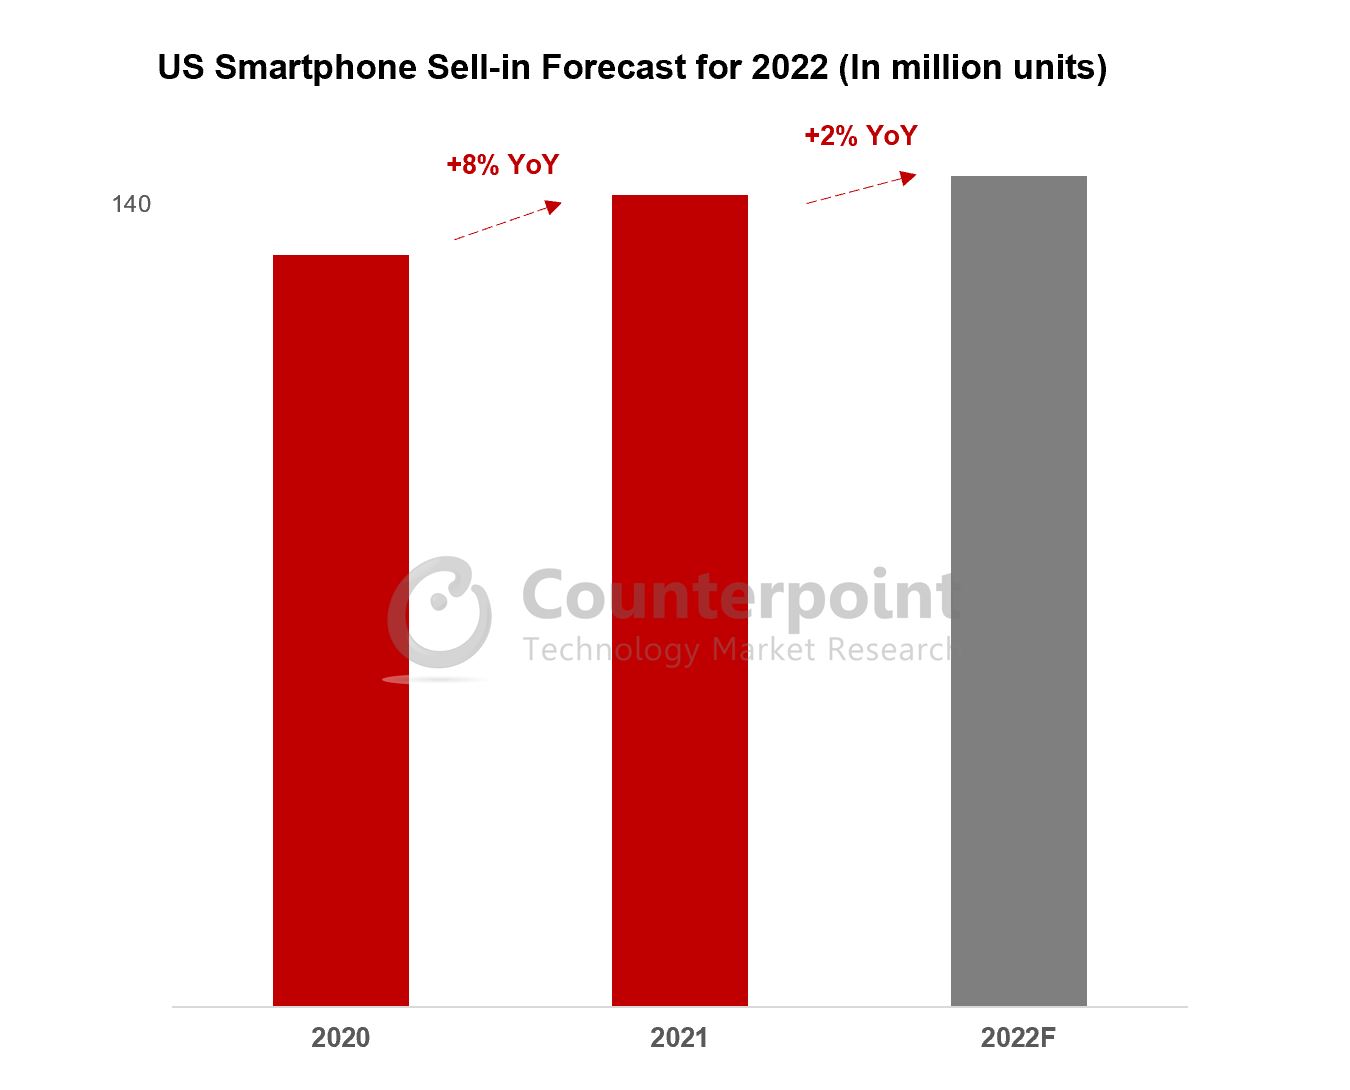 USA Smartphone Forecast 2022